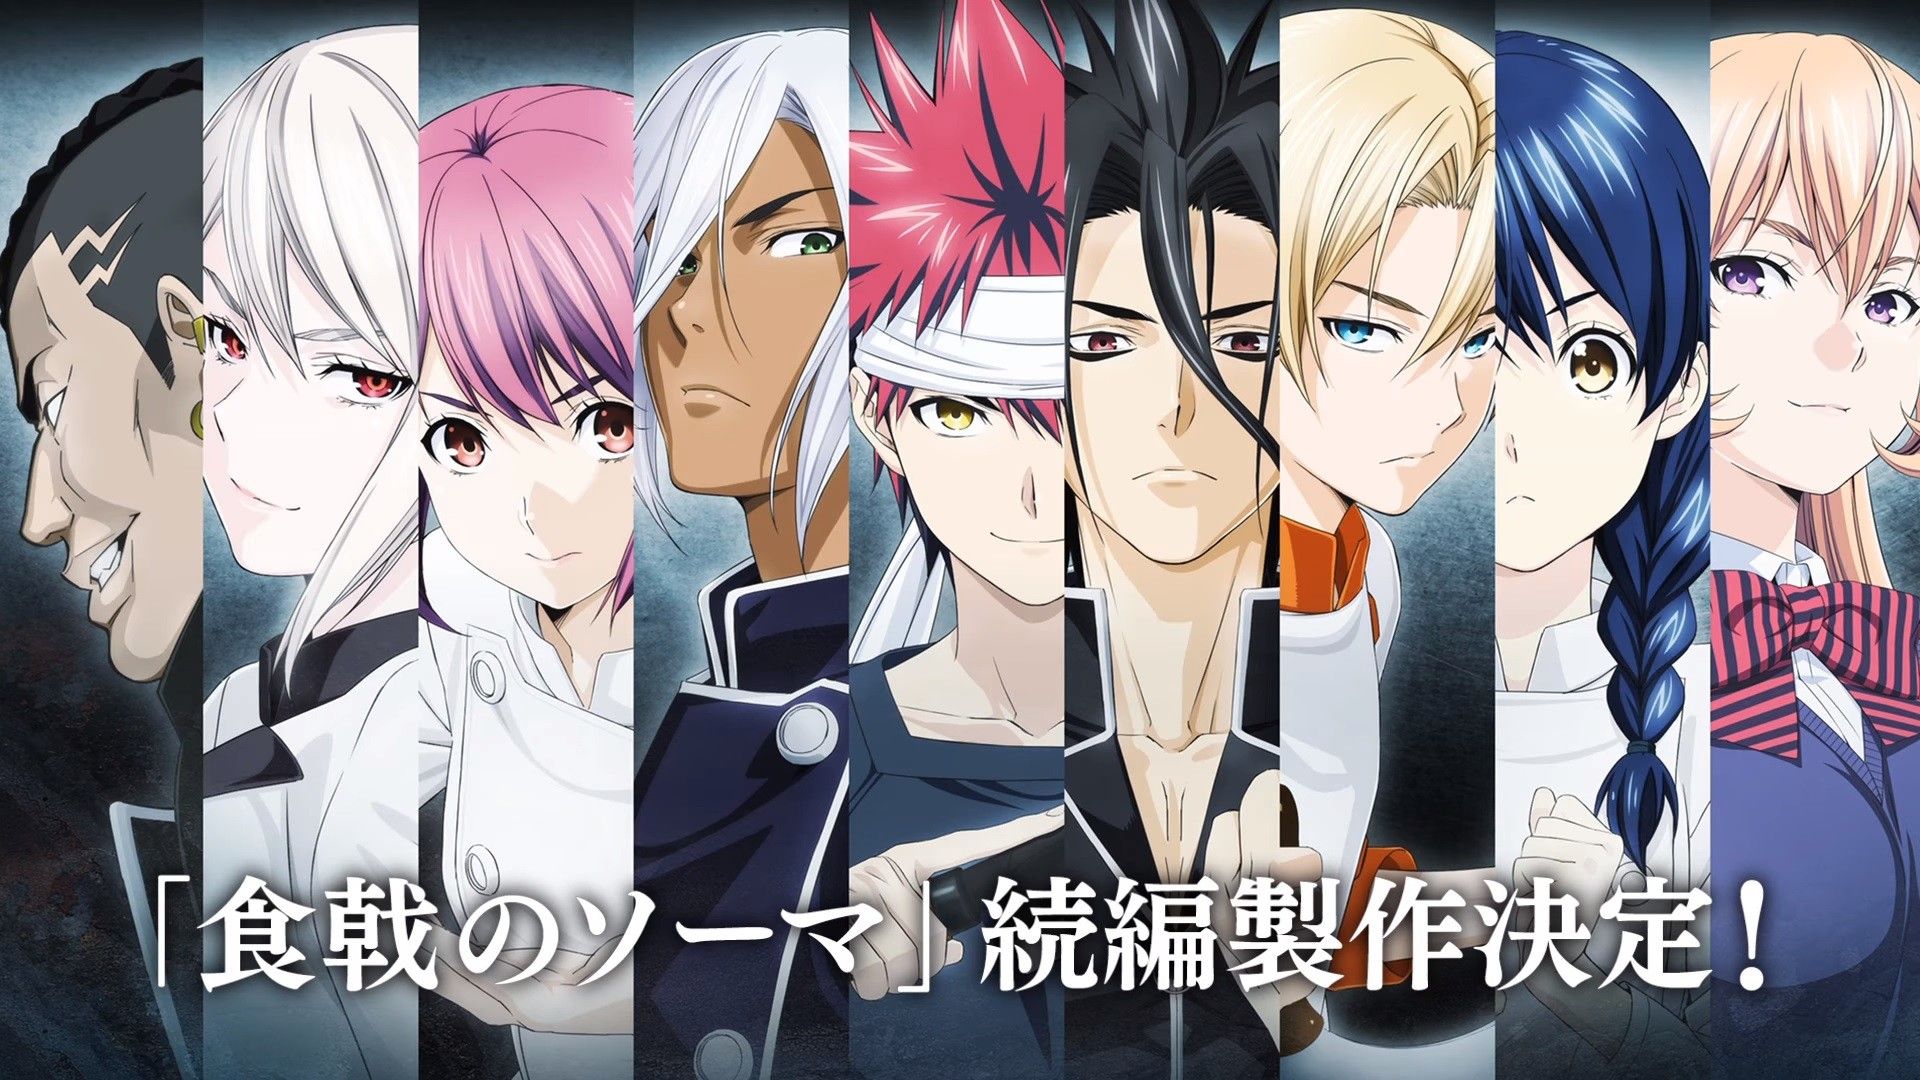 Mobile wallpaper: Anime, Sōma Yukihira, Food Wars: Shokugeki No Soma,  907161 download the picture for free.